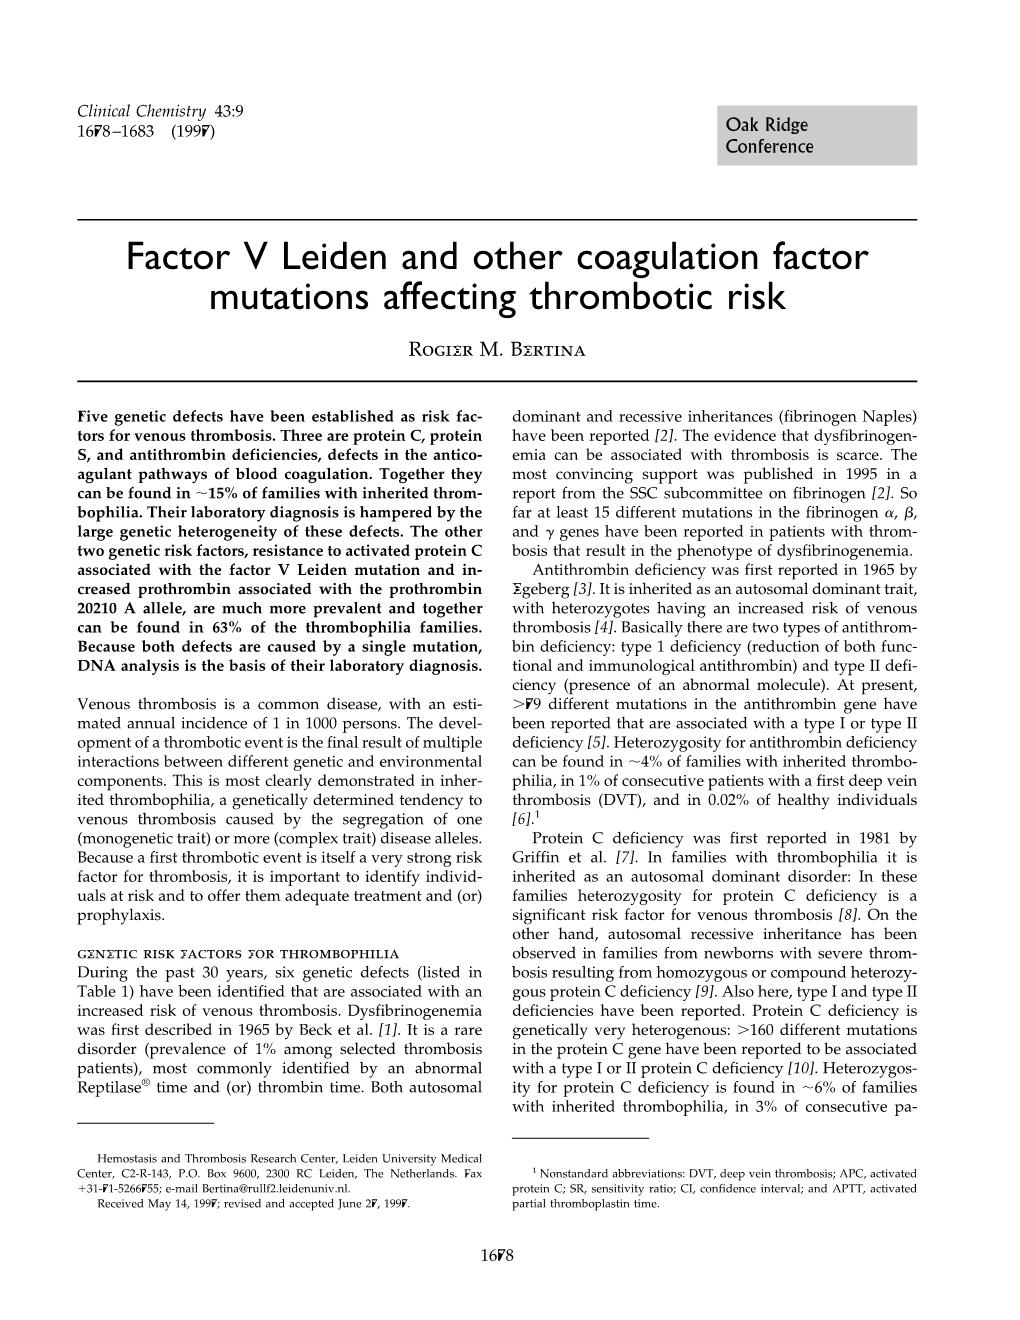 Factor V Leiden and Other Coagulation Factor Mutations Affecting Thrombotic Risk